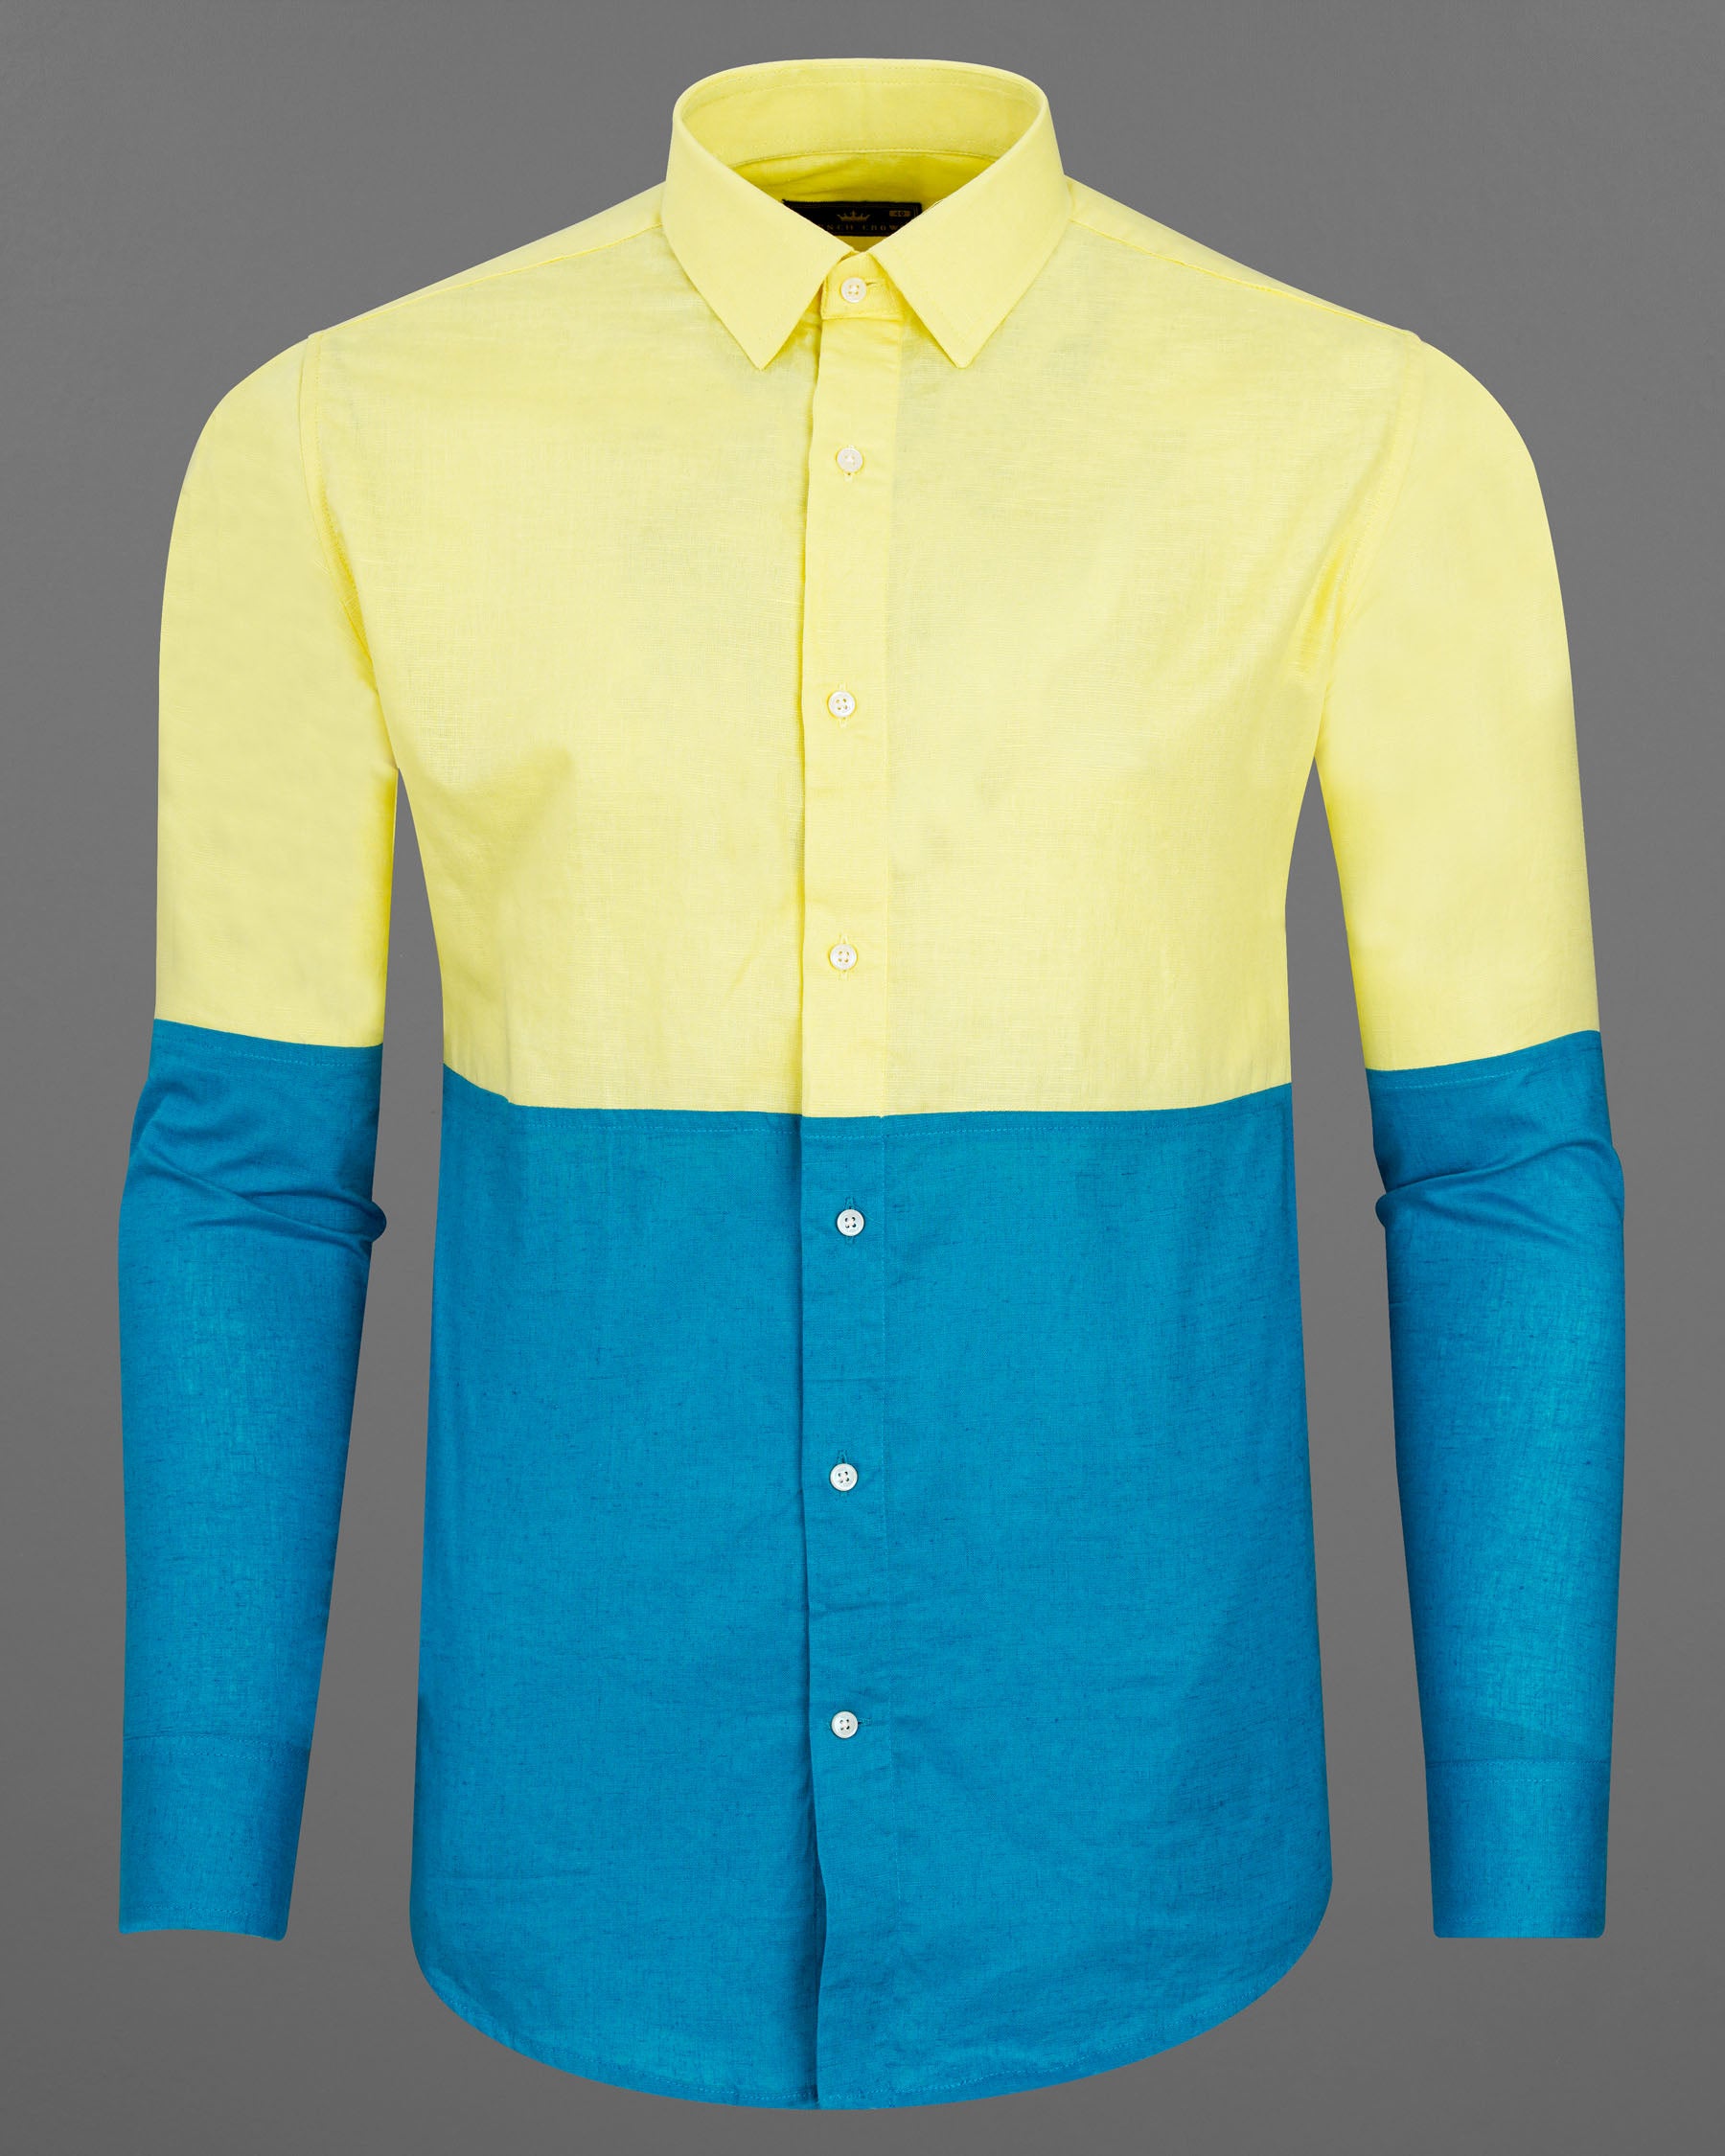 Blond Yellow with Bondi Blue Luxurious Linen Designer Shirt 7752-P117-38, 7752-P117-H-38, 7752-P117-39,7752-P117-H-39, 7752-P117-40, 7752-P117-H-40, 7752-P117-42, 7752-P117-H-42, 7752-P117-44, 7752-P117-H-44, 7752-P117-46, 7752-P117-H-46, 7752-P117-48, 7752-P117-H-48, 7752-P117-50, 7752-P117-H-50, 7752-P117-52, 7752-P117-H-52